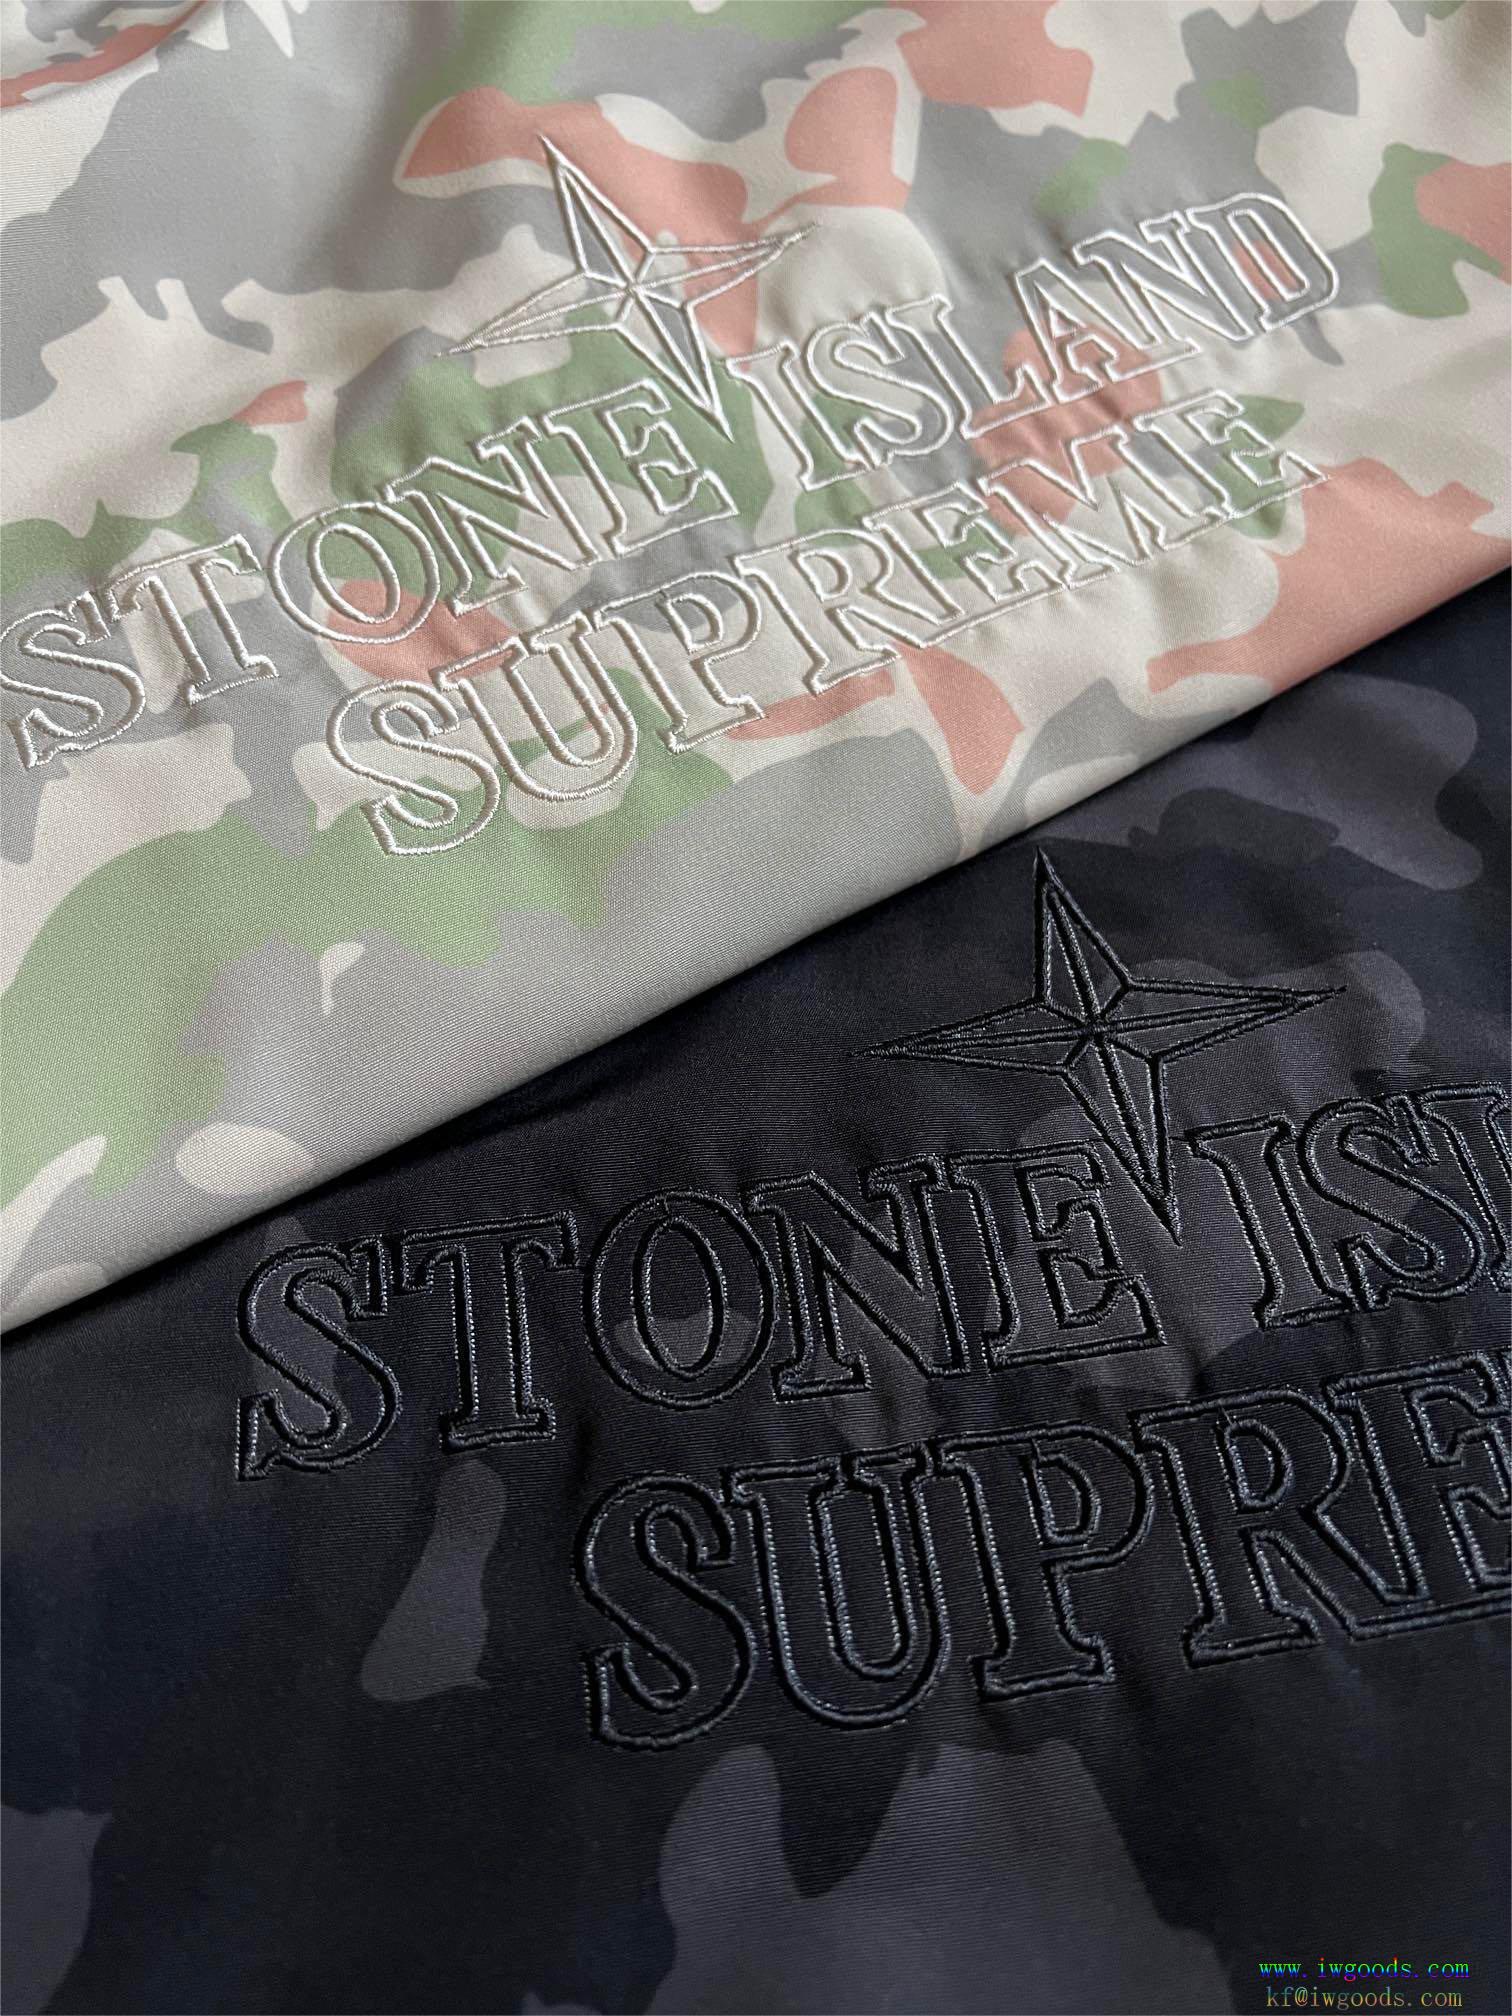 STONE ISLAND X SUPREMEカジュアル反転魅力格安SALE偽 ブランドジャケット